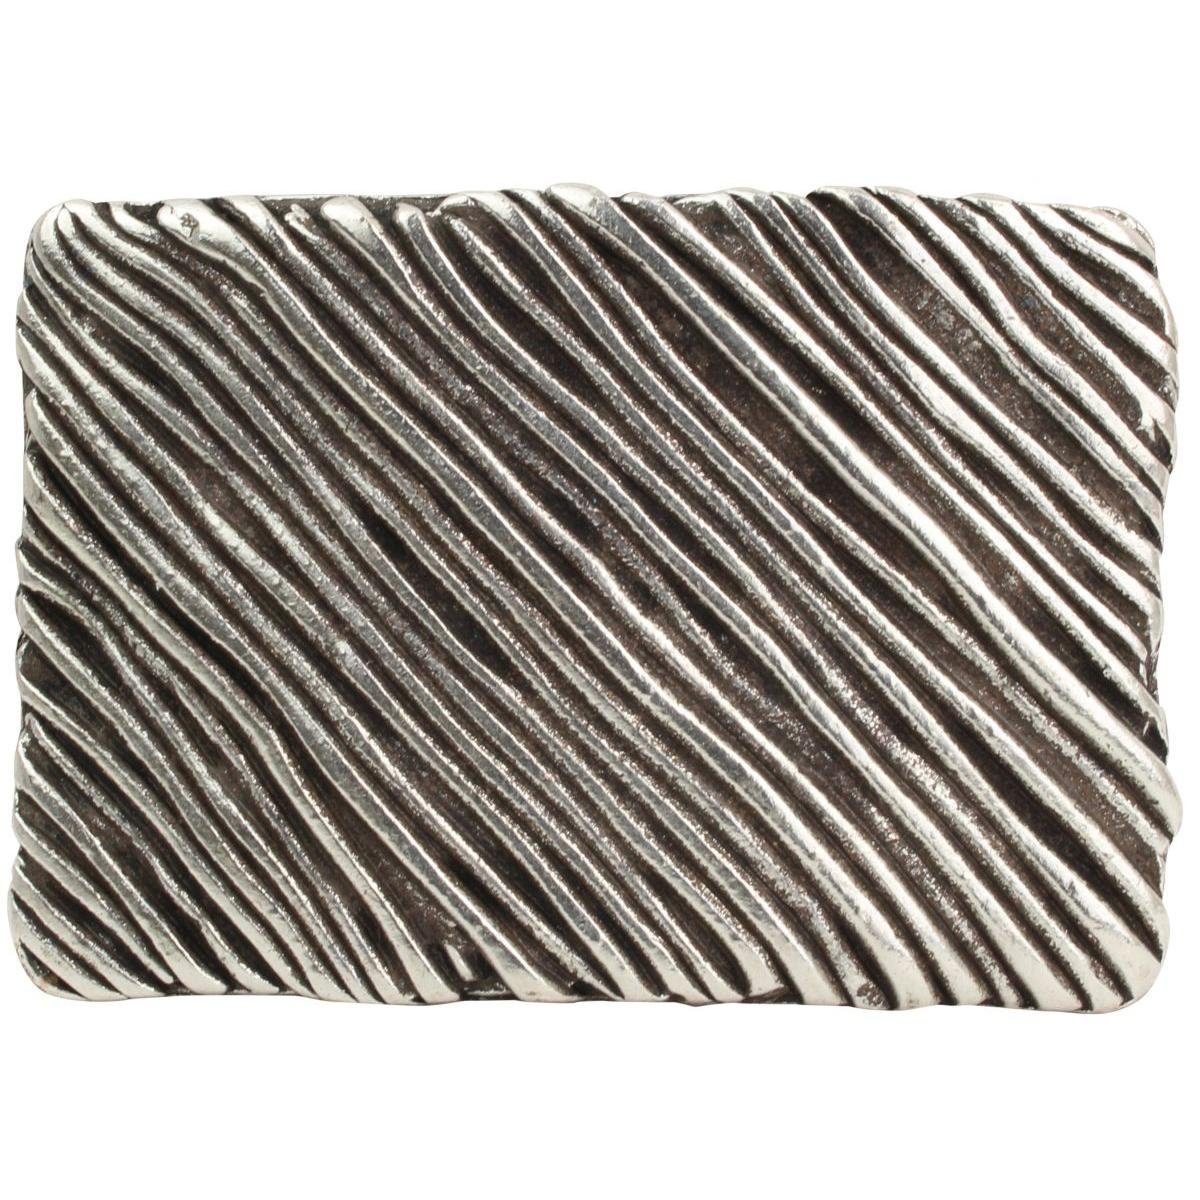 BELTINGER Gürtelschnalle Superficial Stripes 4,0 cm - Buckle Wechselschließe Gürtelschließe 40m Silber